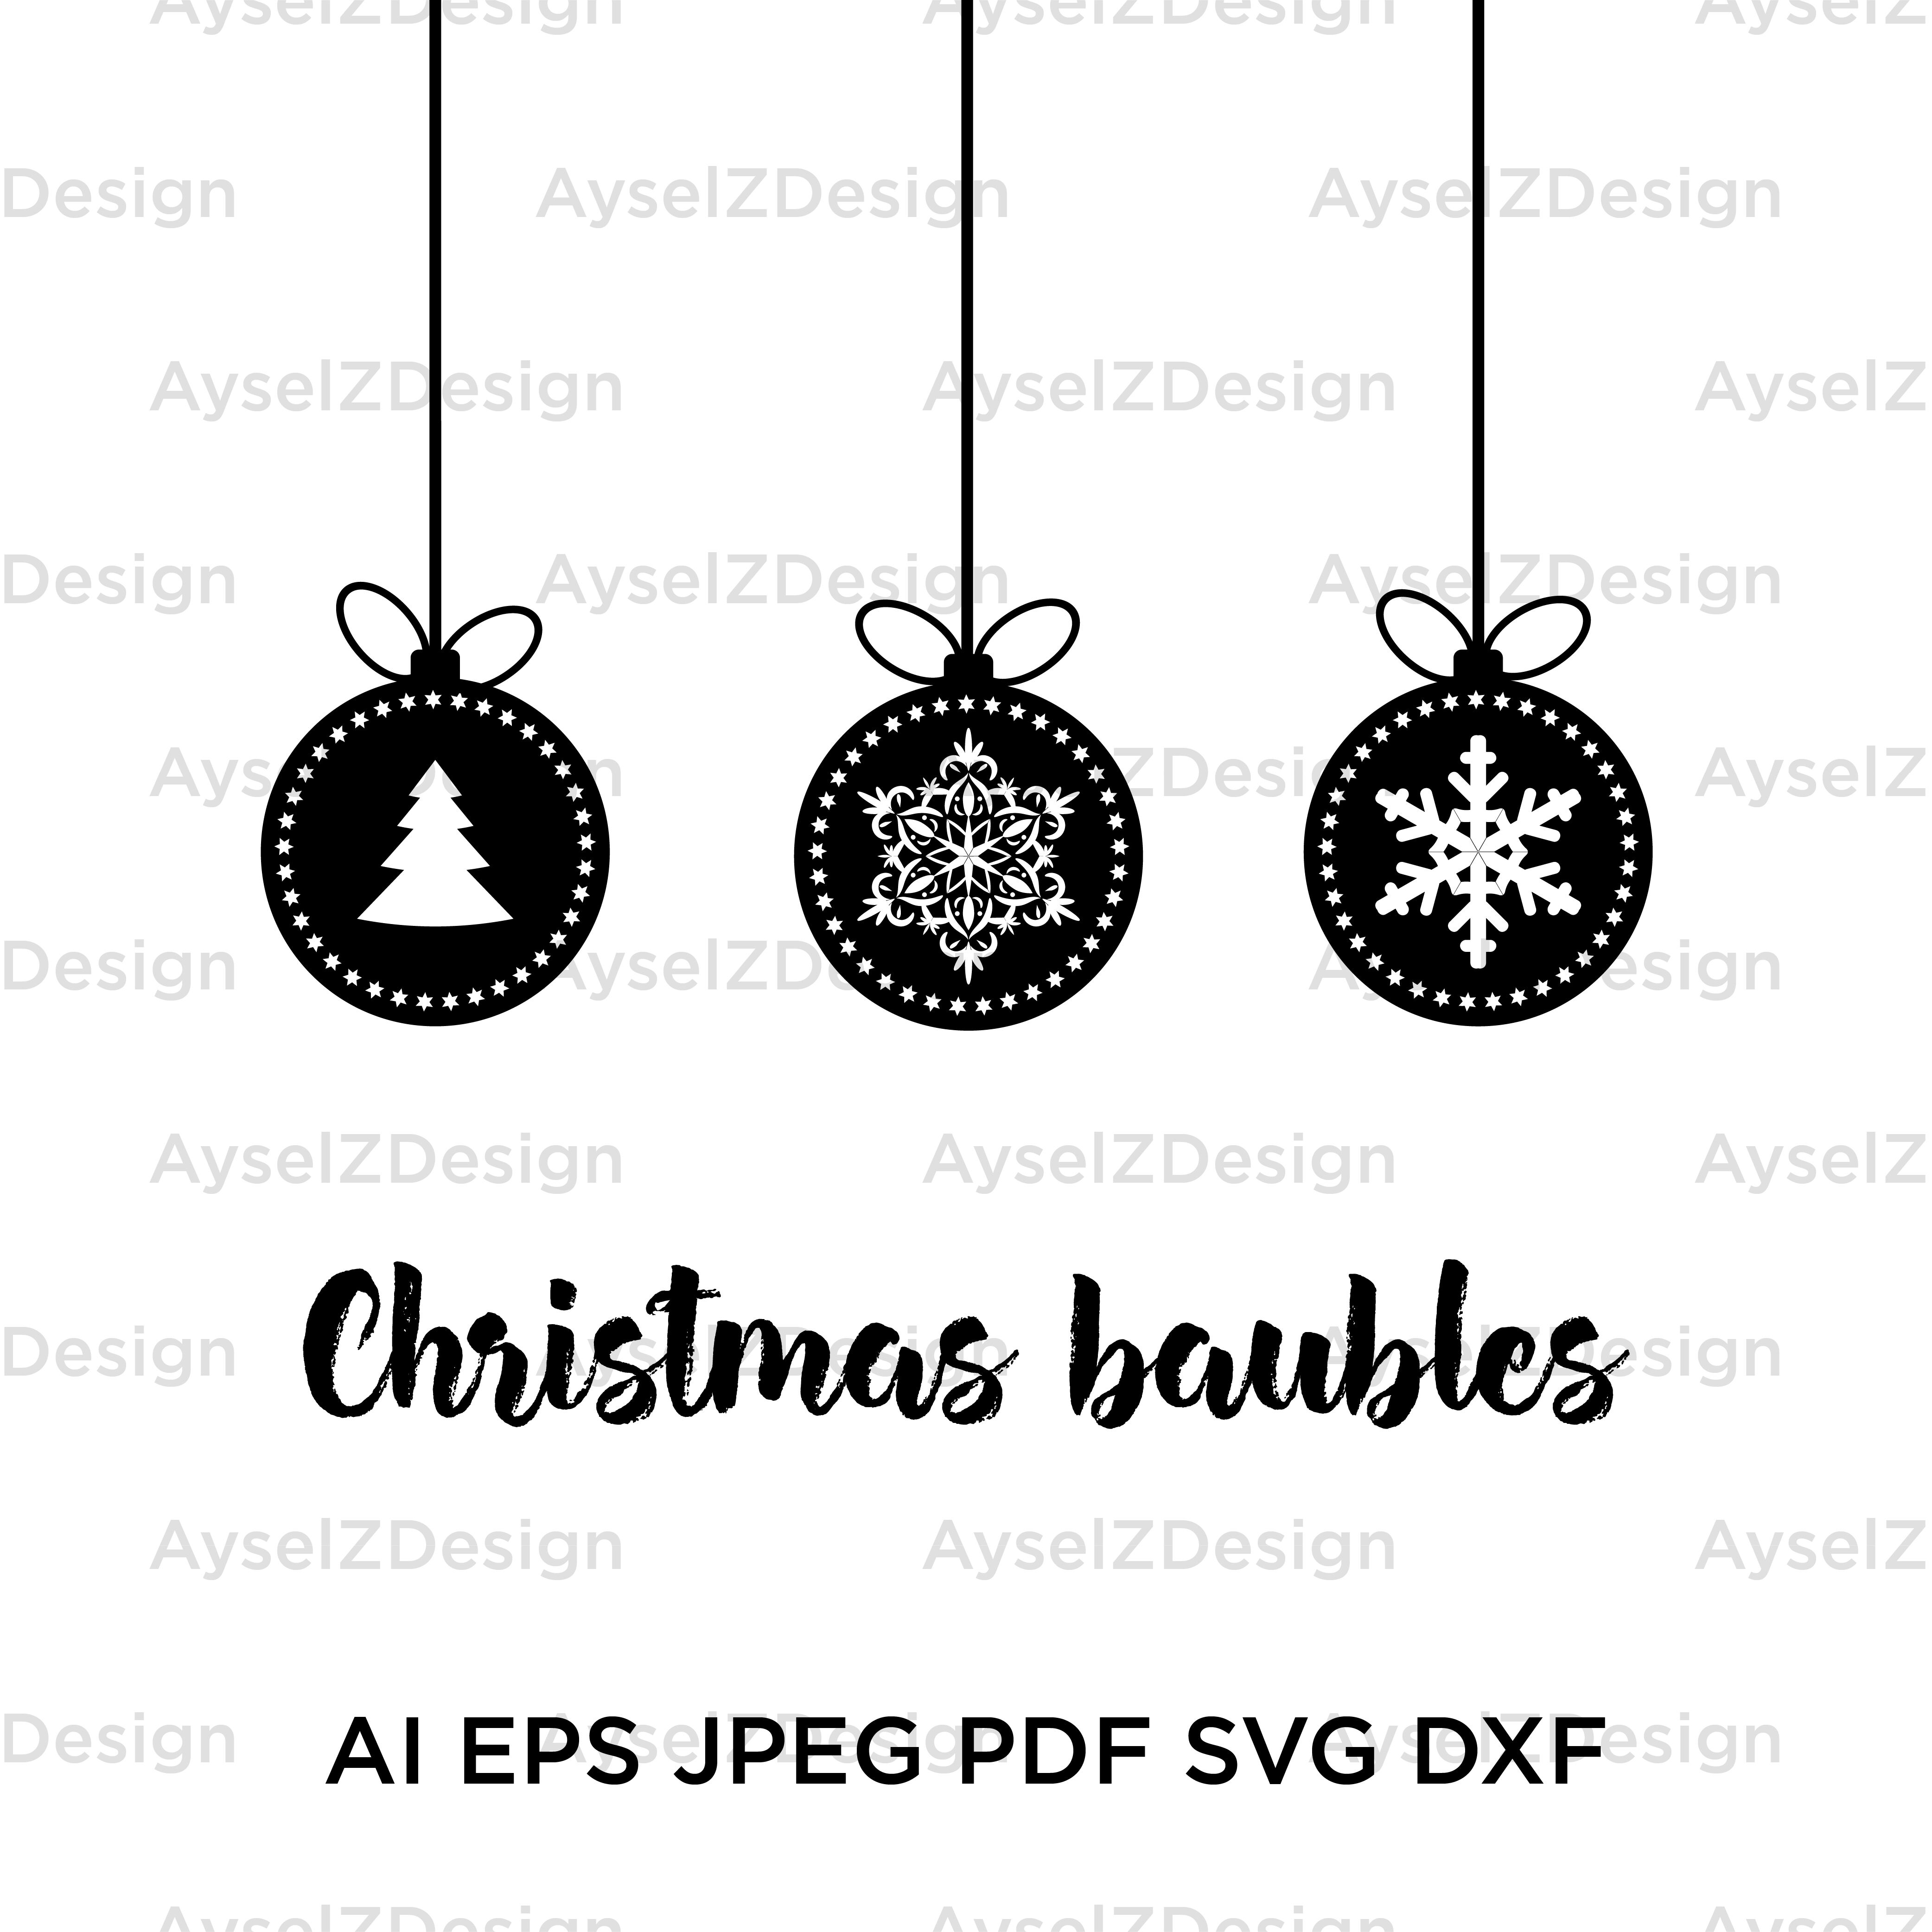 Download Christmas Balls Svg Christmas Ornaments Svg Christmas Svg Clipart By Ayselzdesign Thehungryjpeg Com